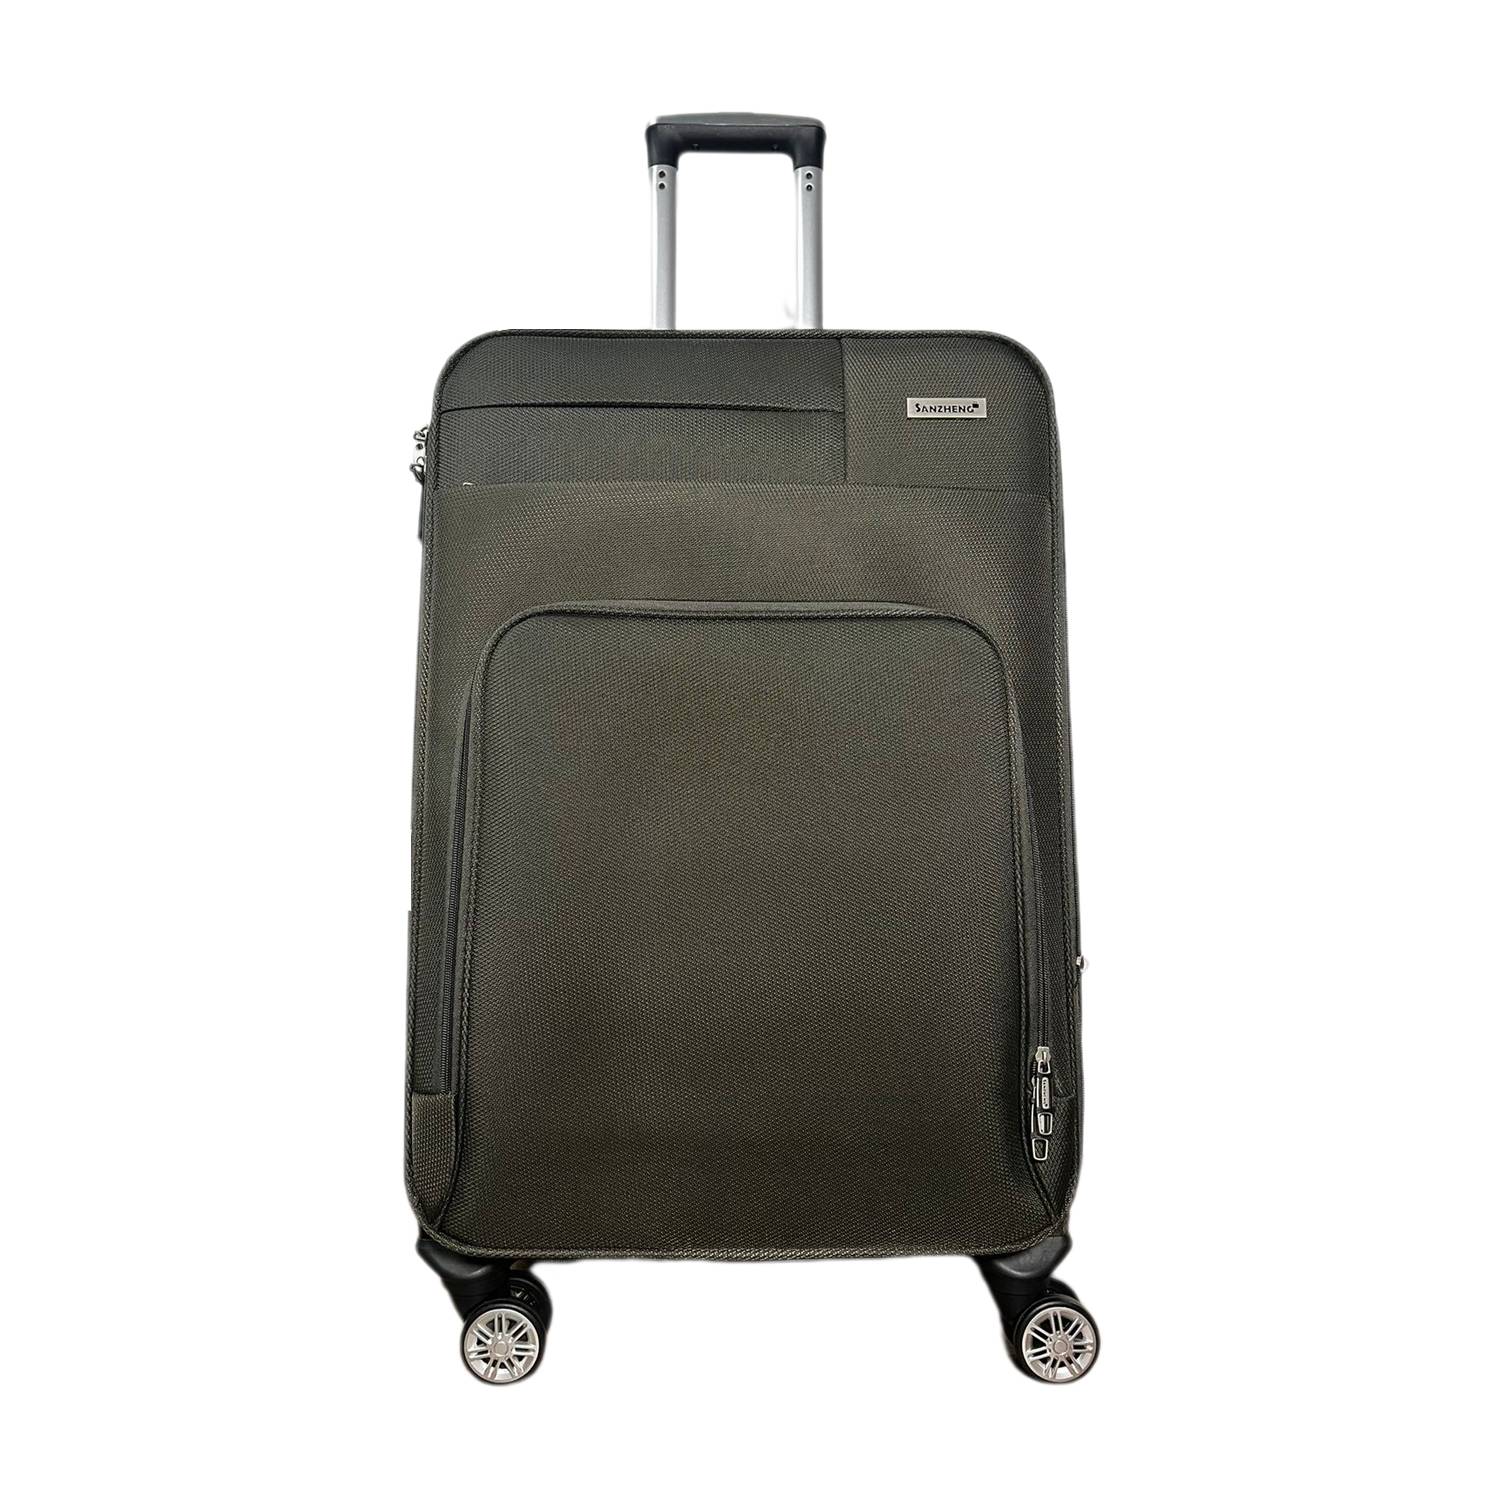 maleta viaje 23kg – Compra maleta viaje 23kg con envío gratis en AliExpress  version